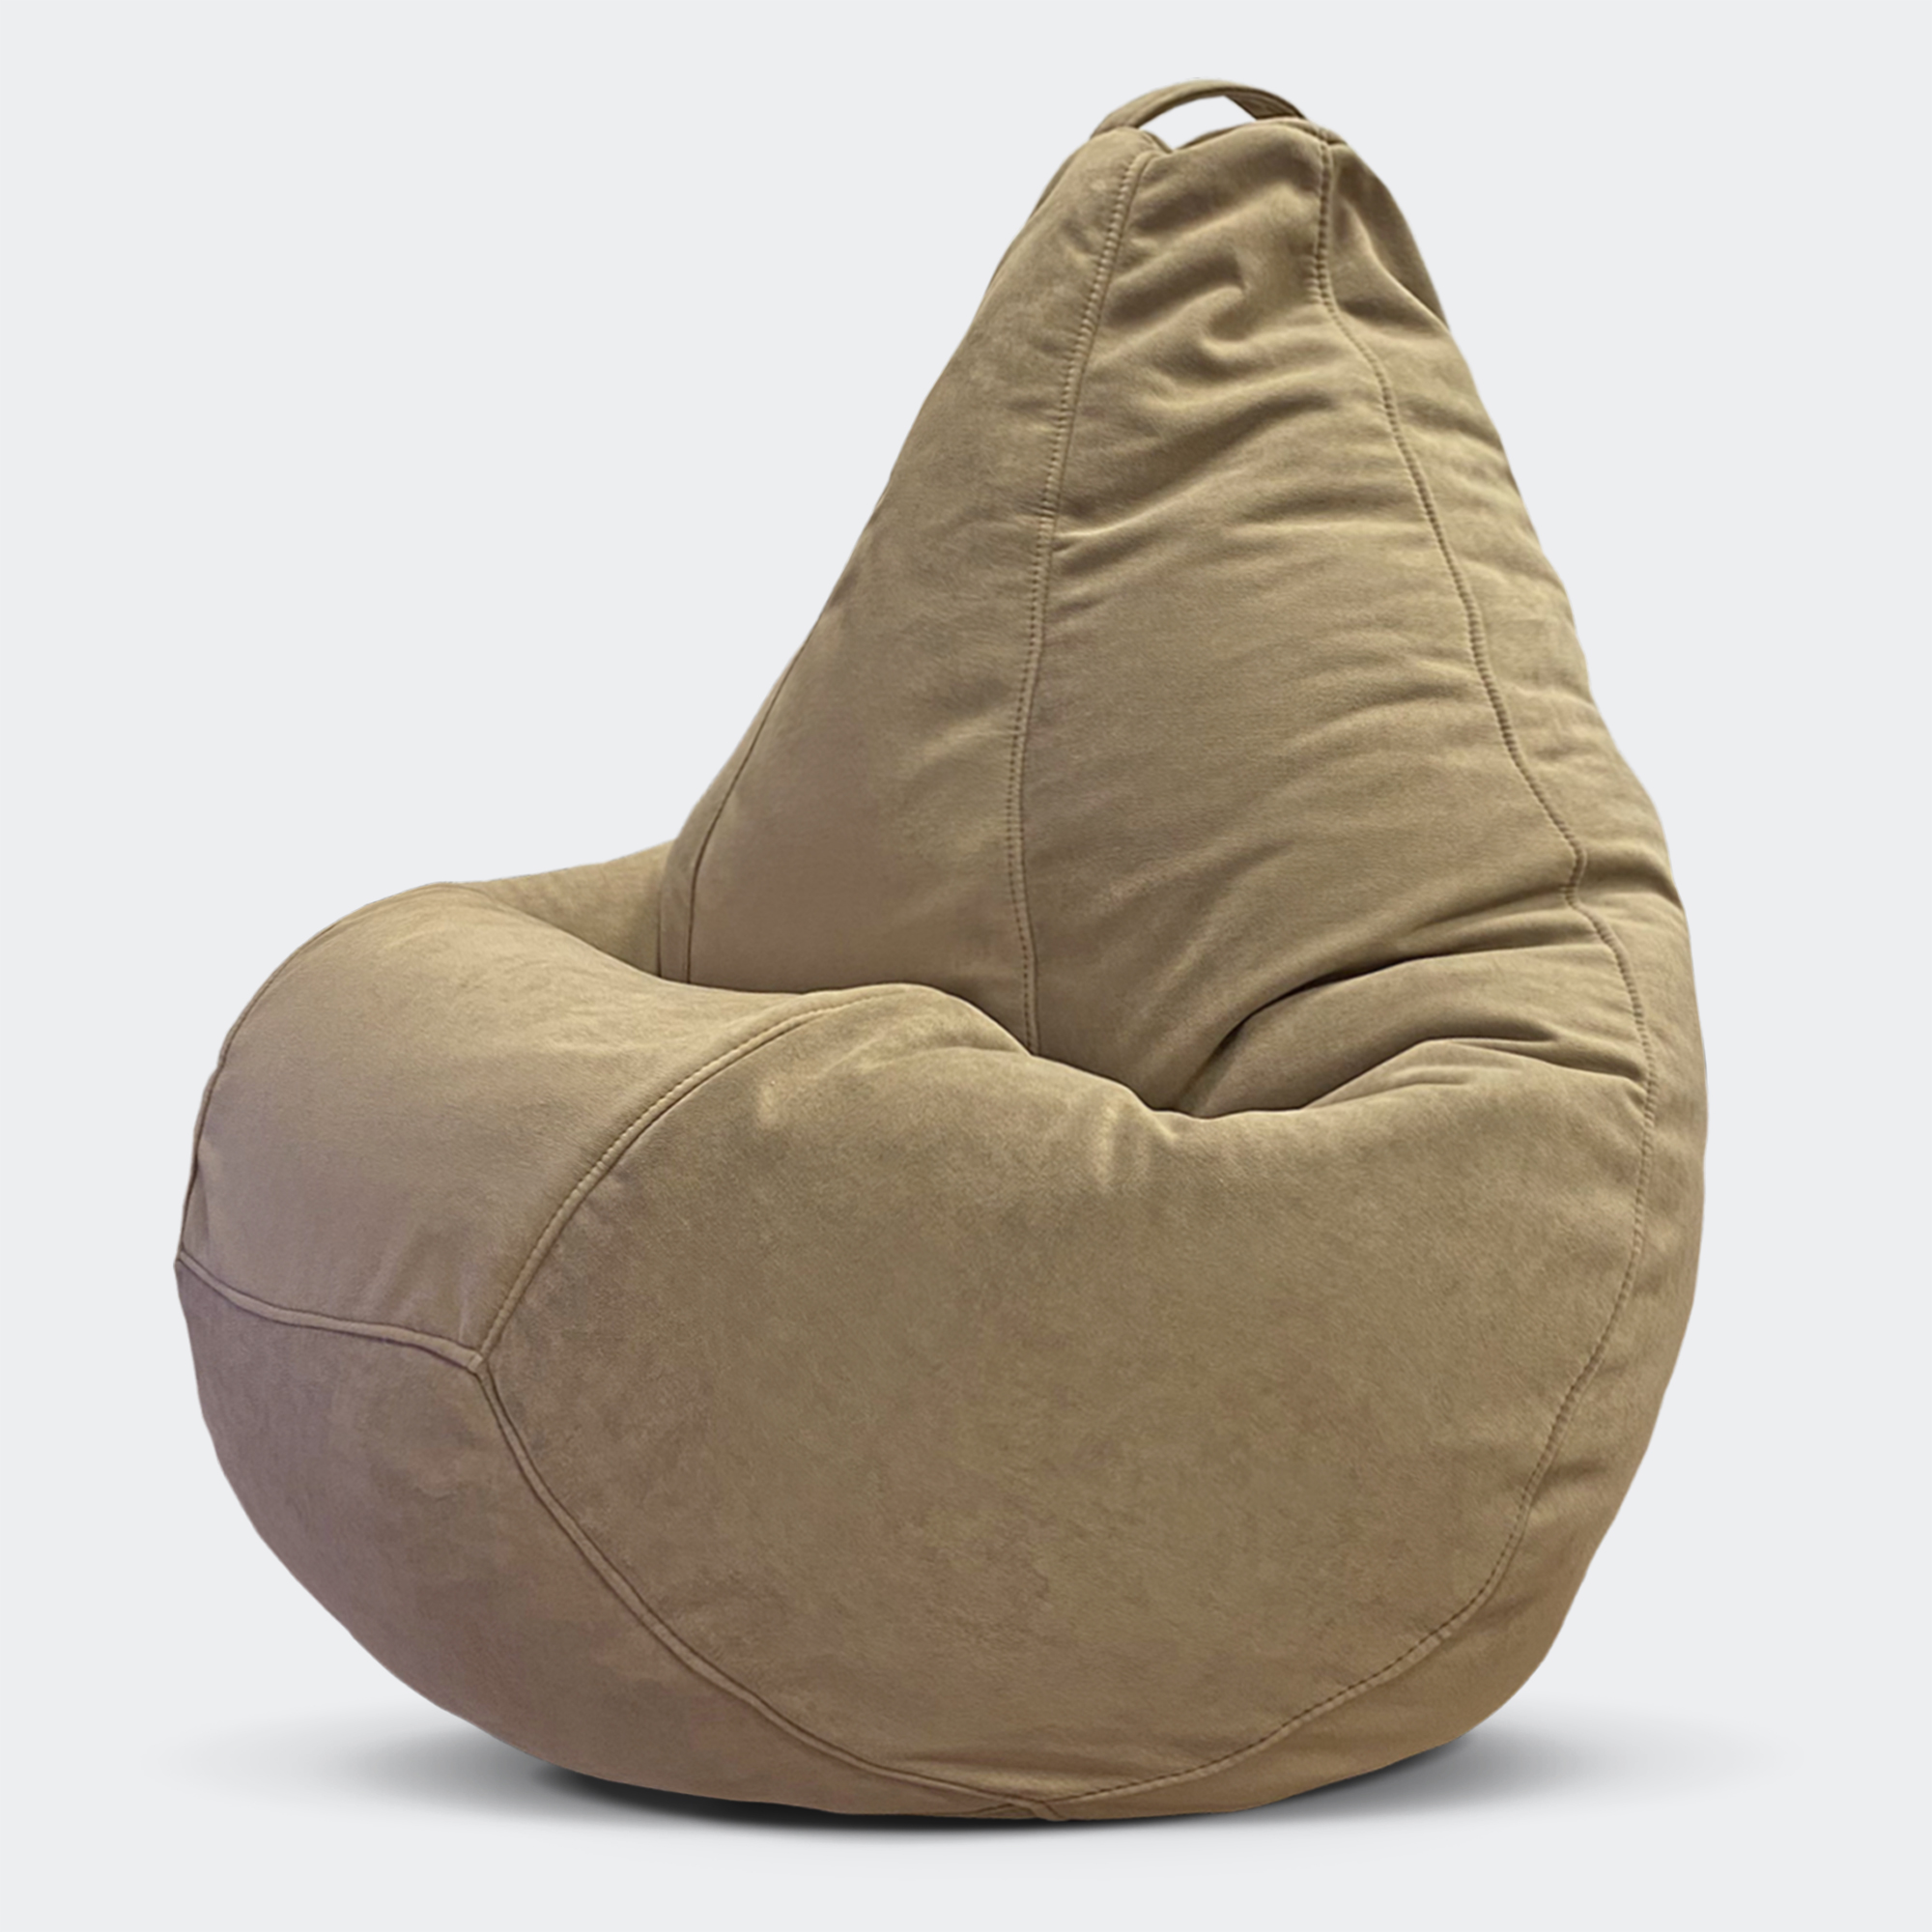 фото Кресло-мешок puflove пуфик груша, размер xxxl, темно-бежевый велюр